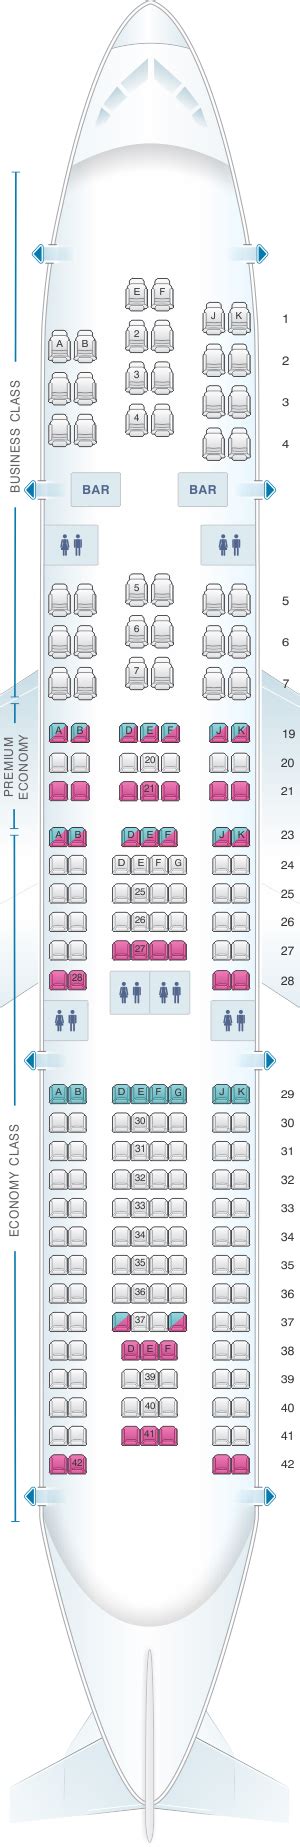 Plan De Cabine Air France Airbus A330 200 Long Haul International